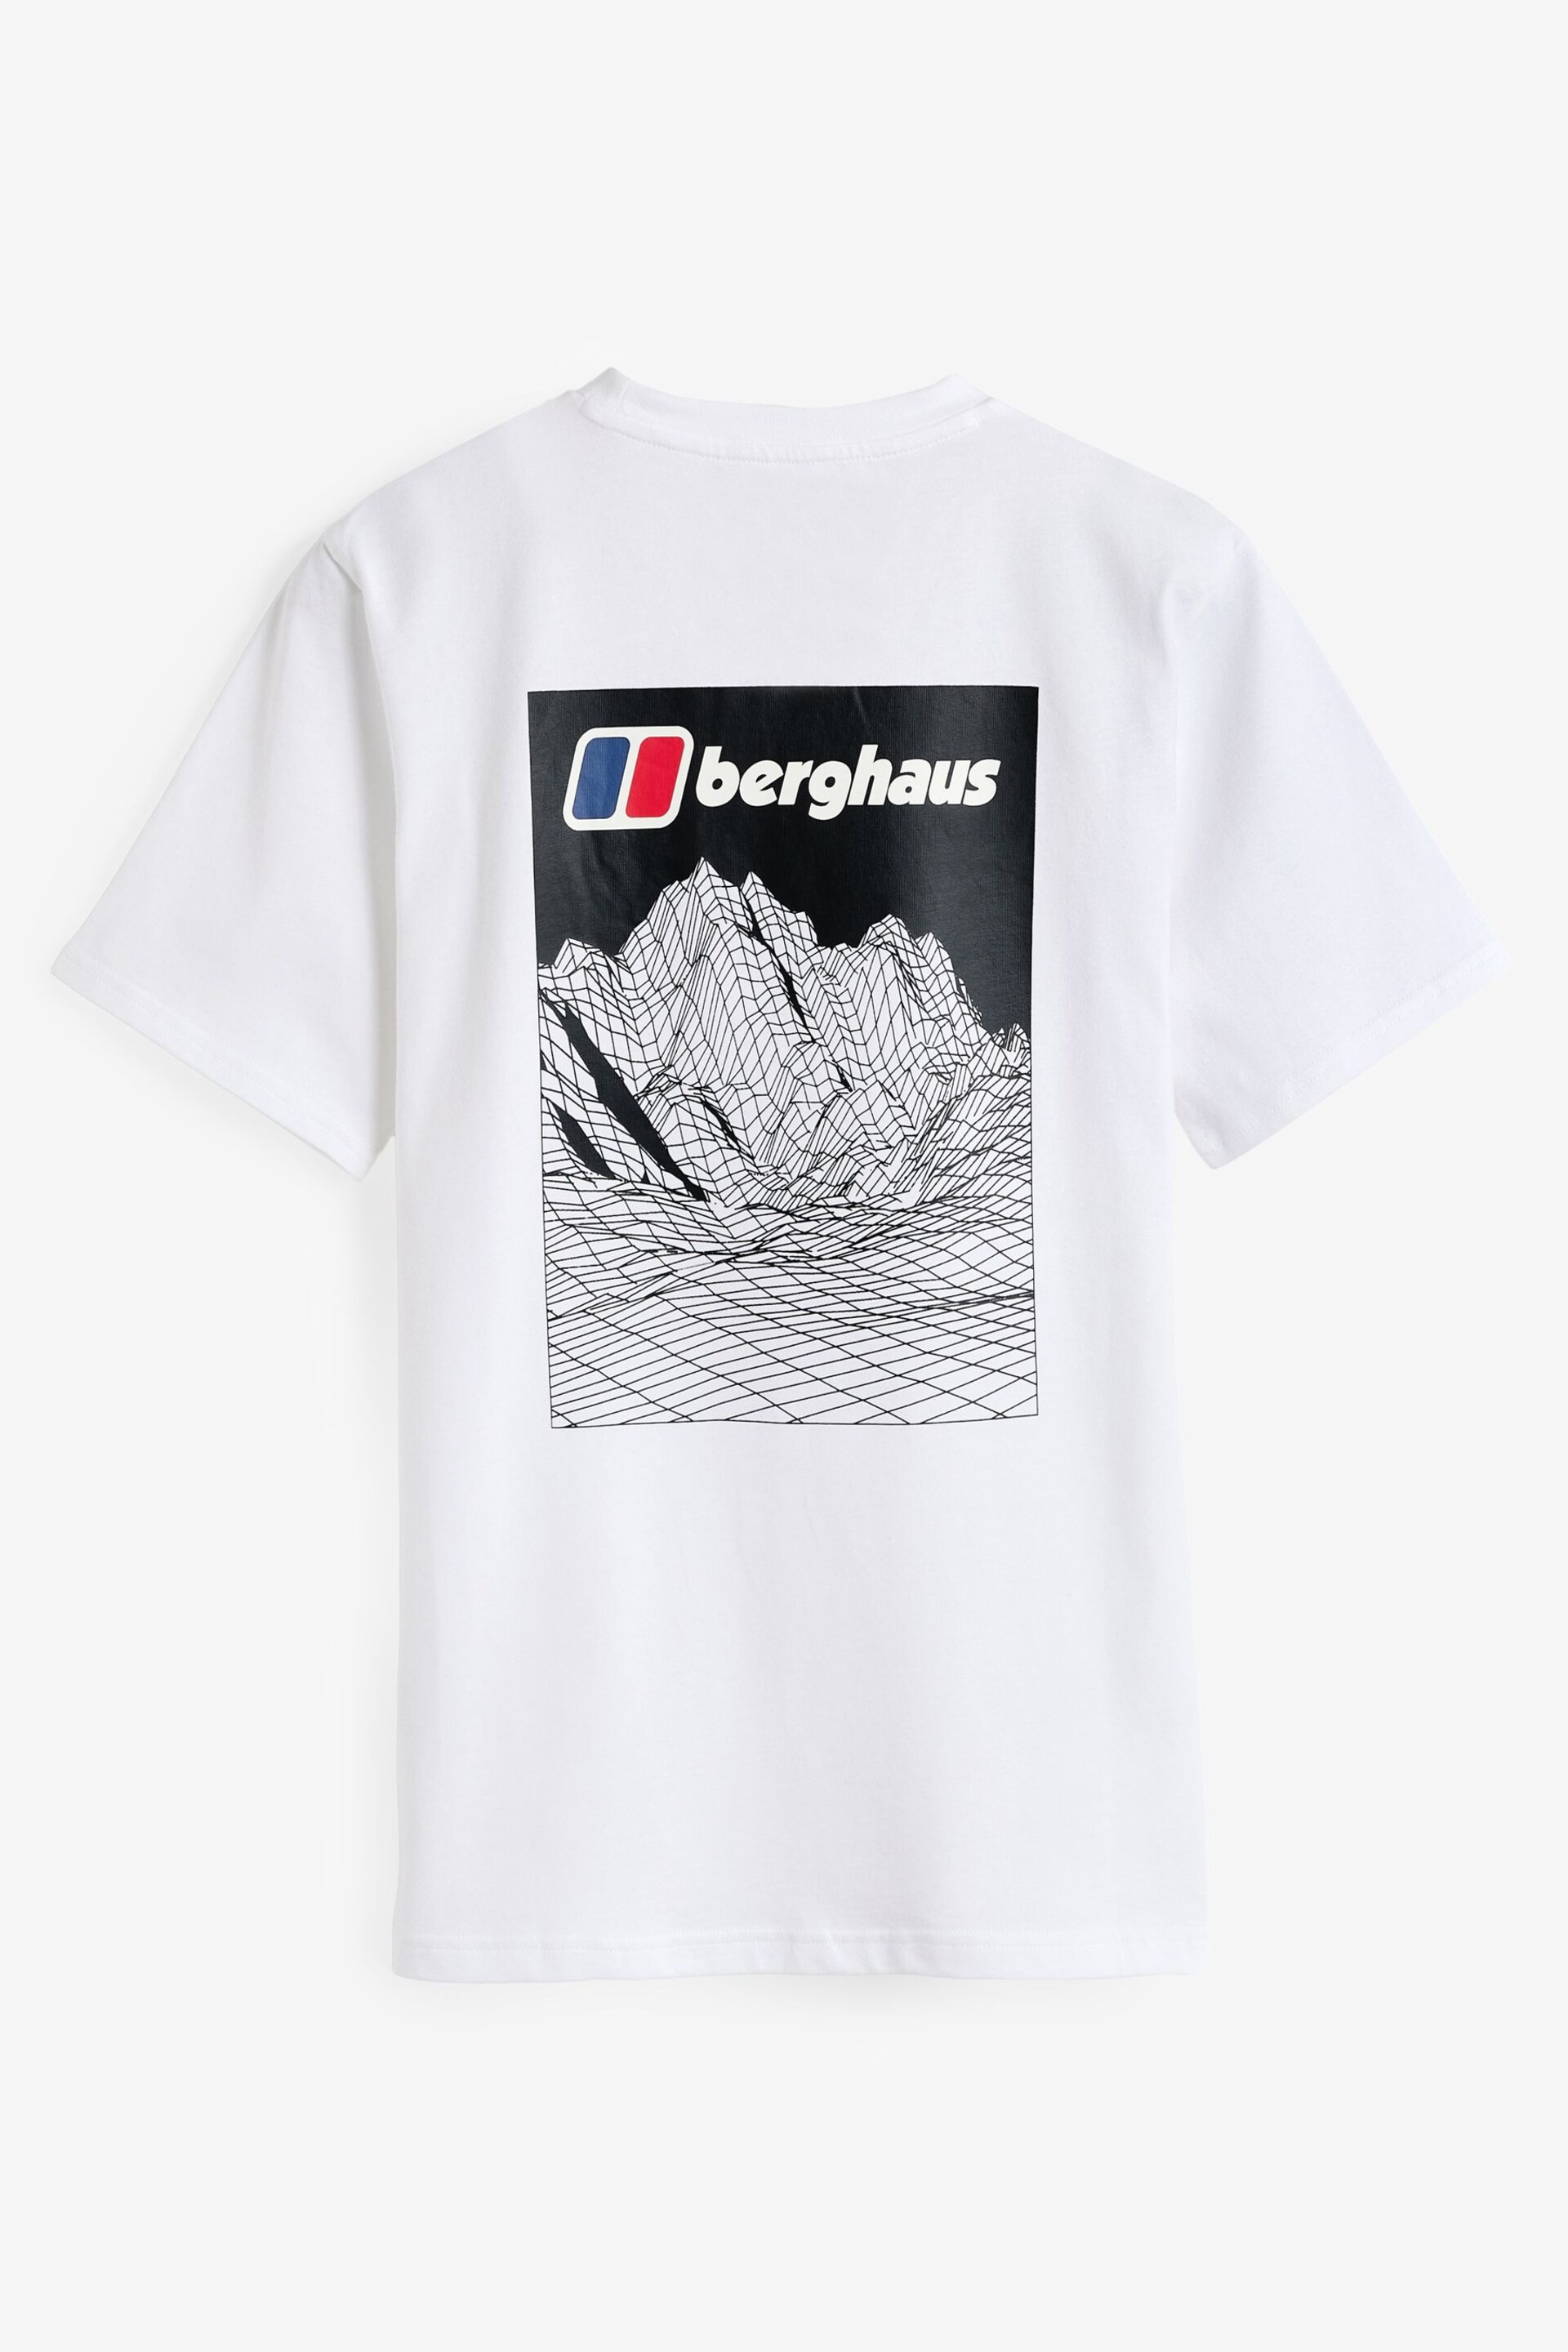 Berghaus Width Mountain Short Sleeve White T-Shirt - Image 2 of 2